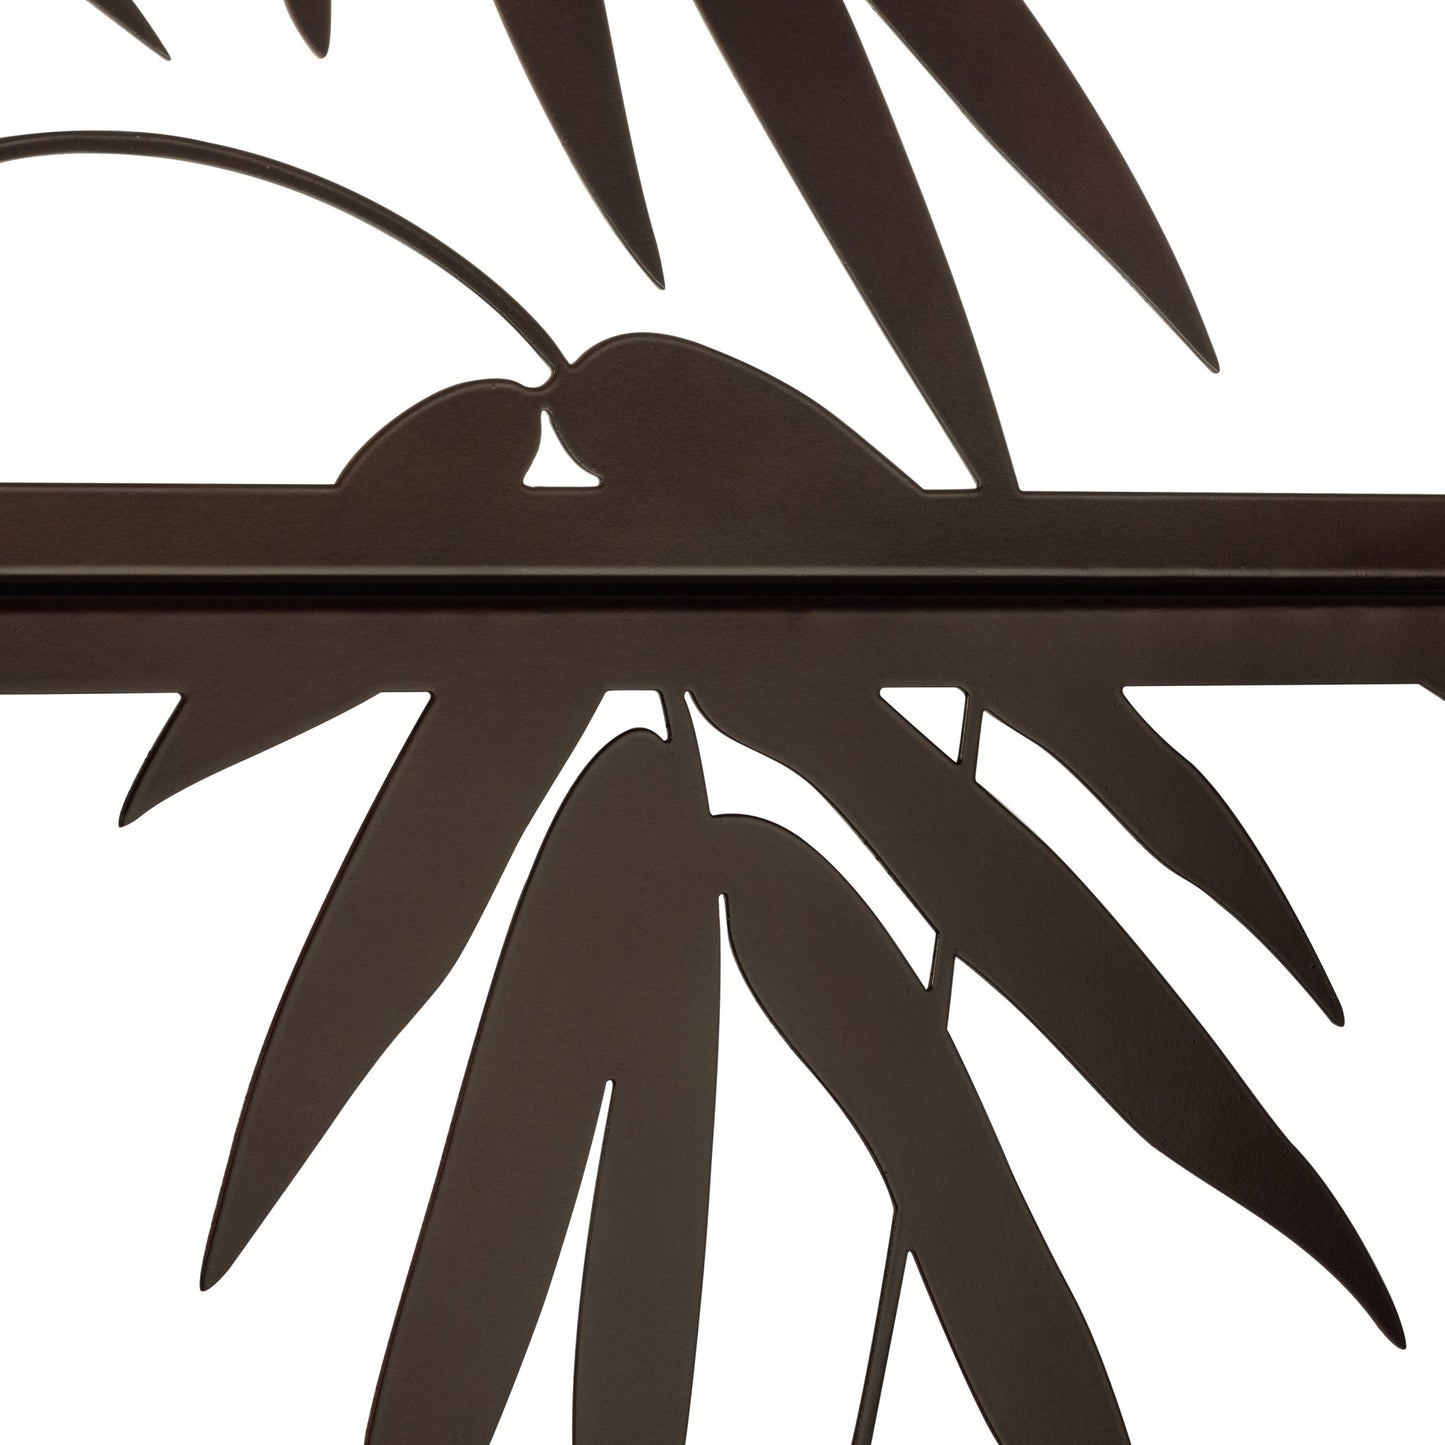 H Potter metal wrought iron trellis Screen Privacy for Patio Deck Balcony Backyard landscape climbing plants yard art